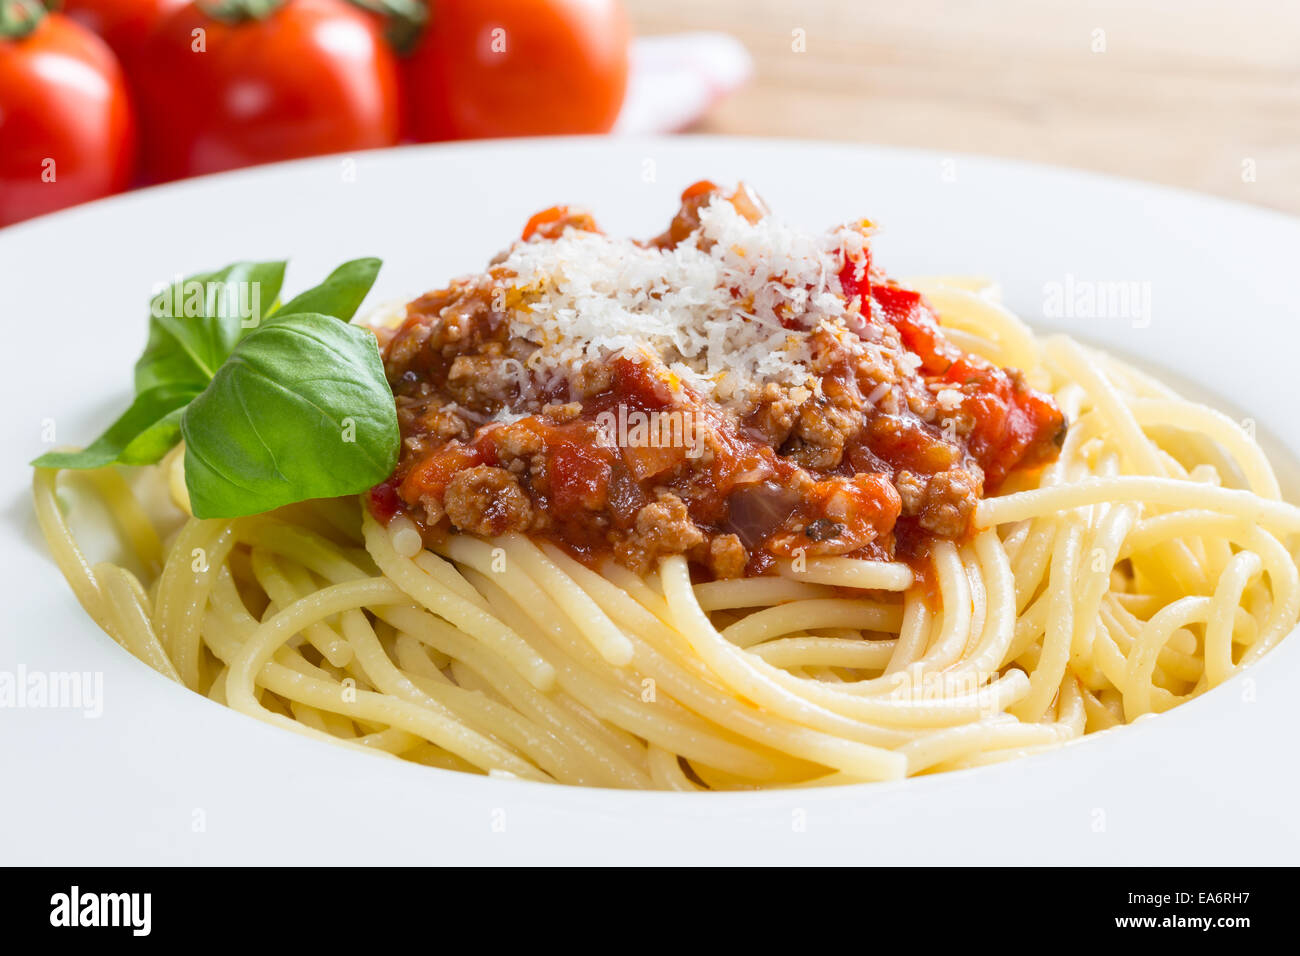 Spaghetti mit Bolognese-Sauce Parmesan und Basilikum. Stockfoto